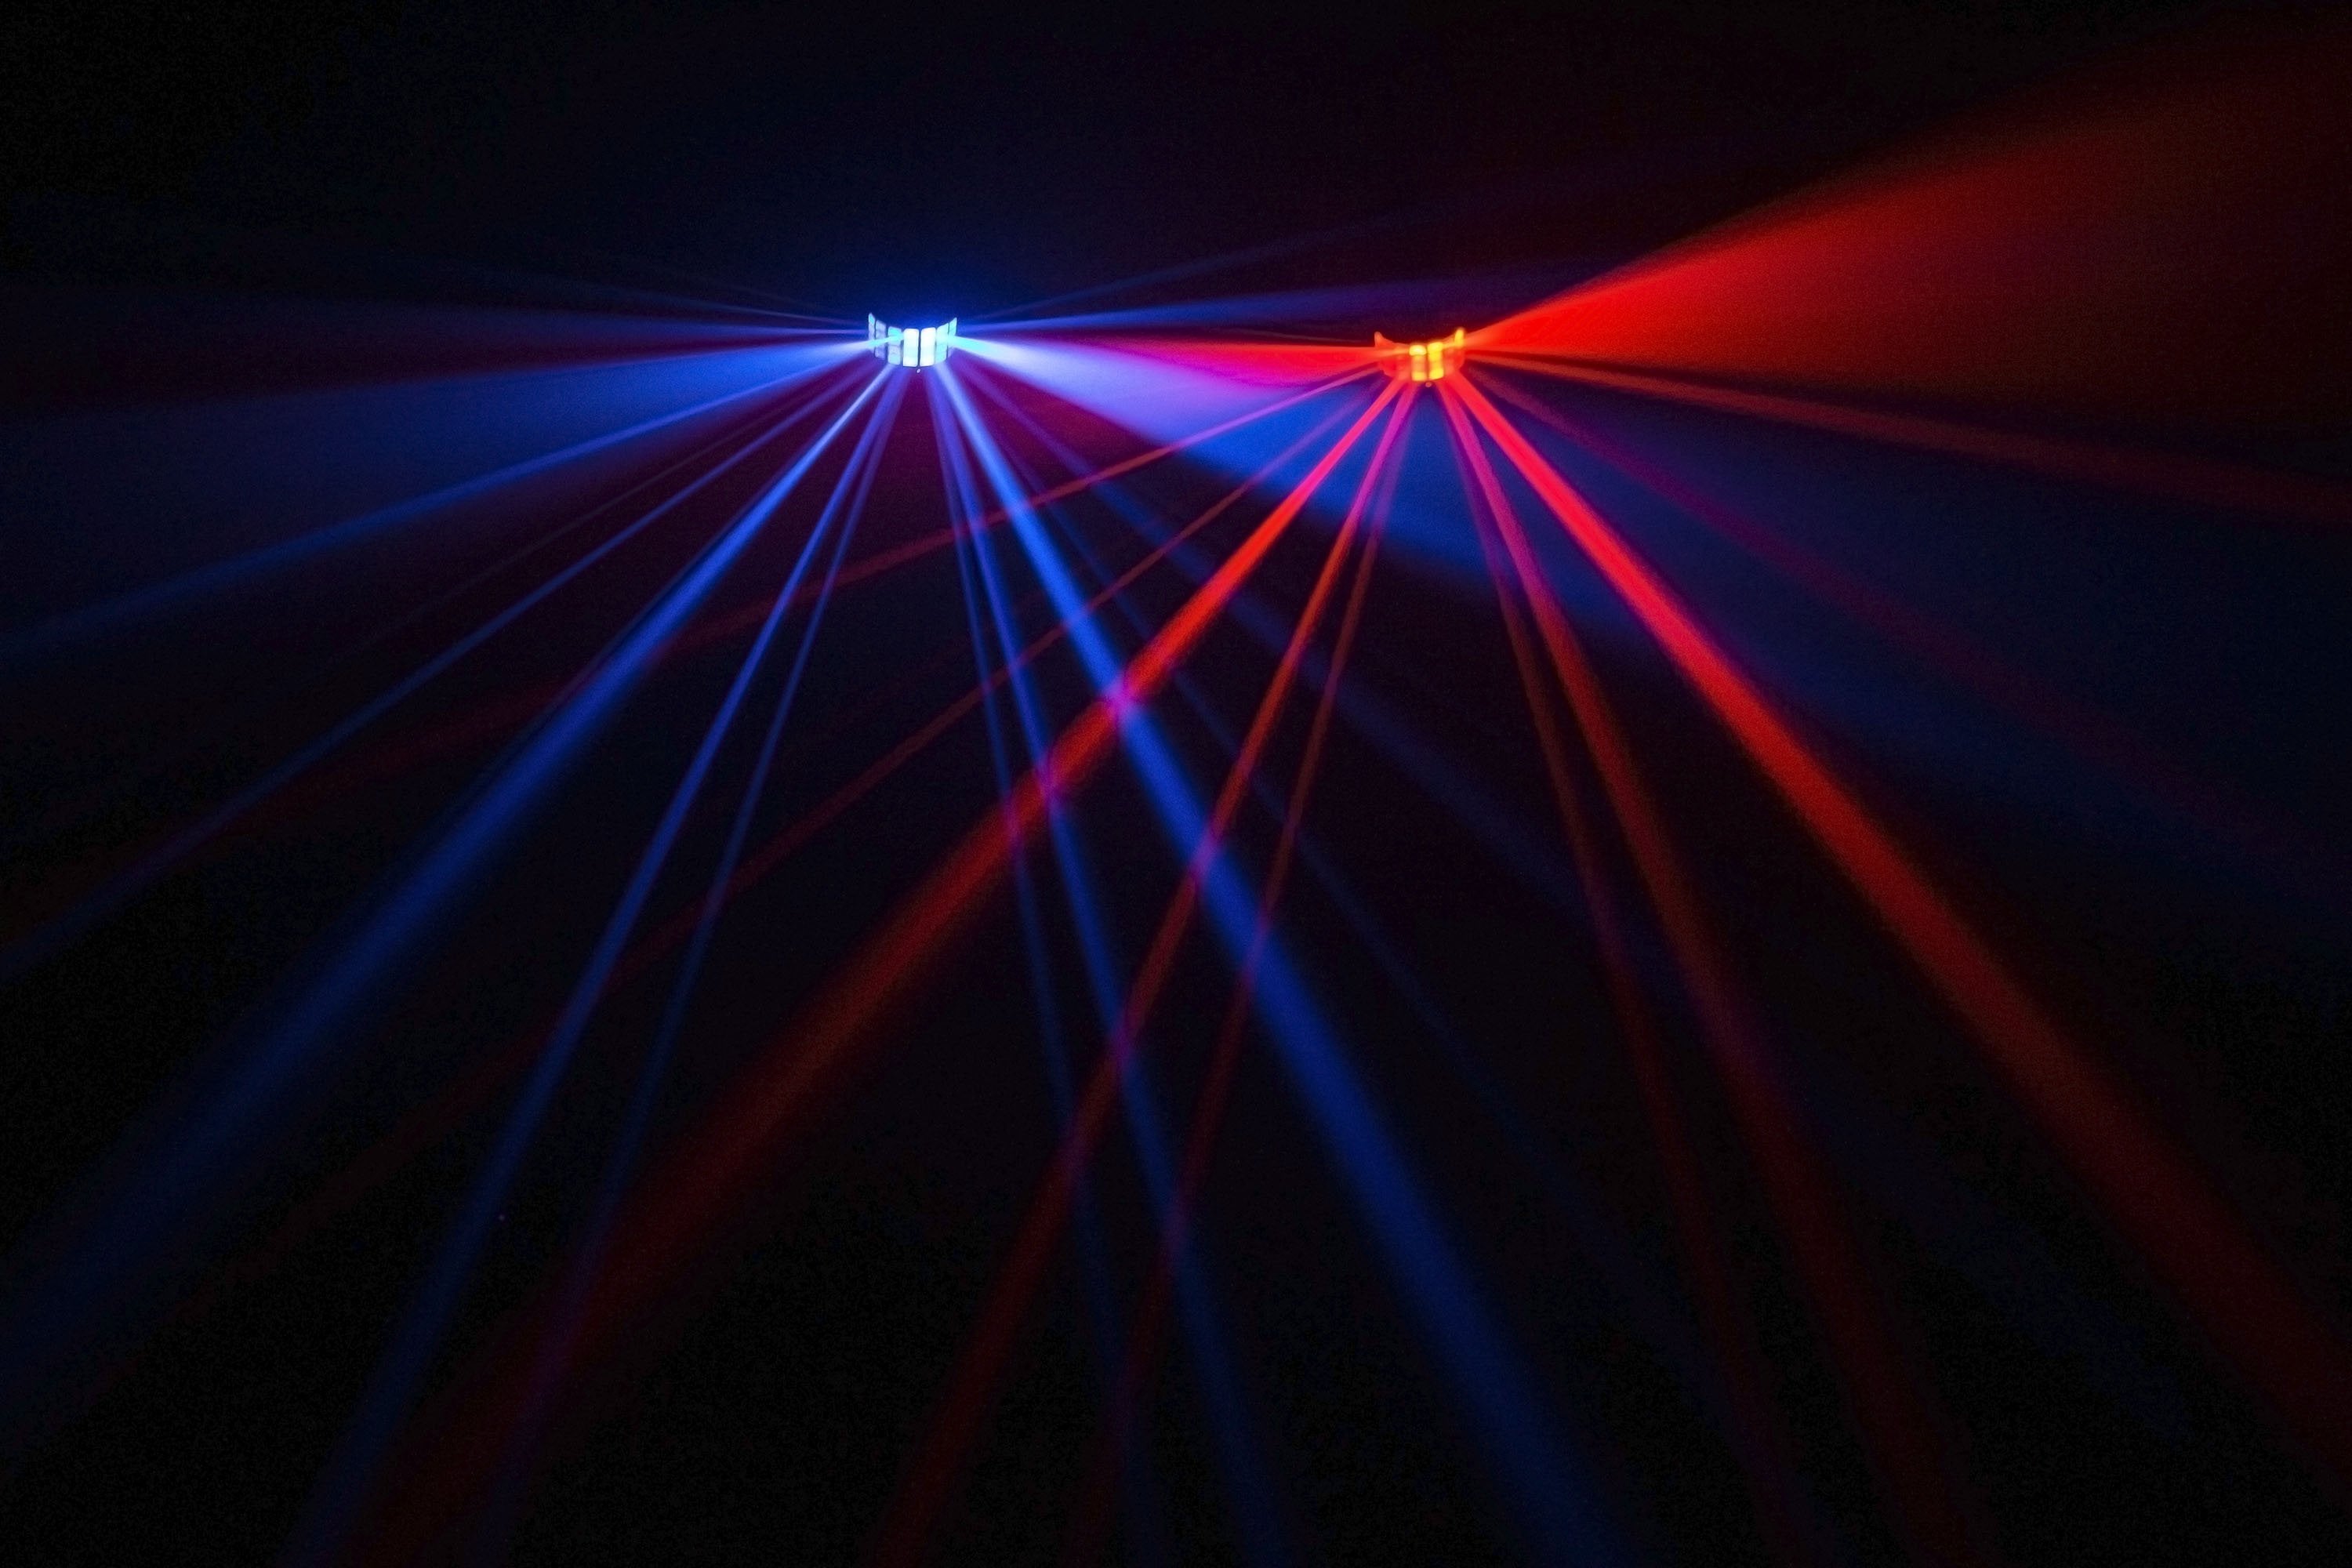 Equinox Viper RGB Lighting Effect - DY Pro Audio